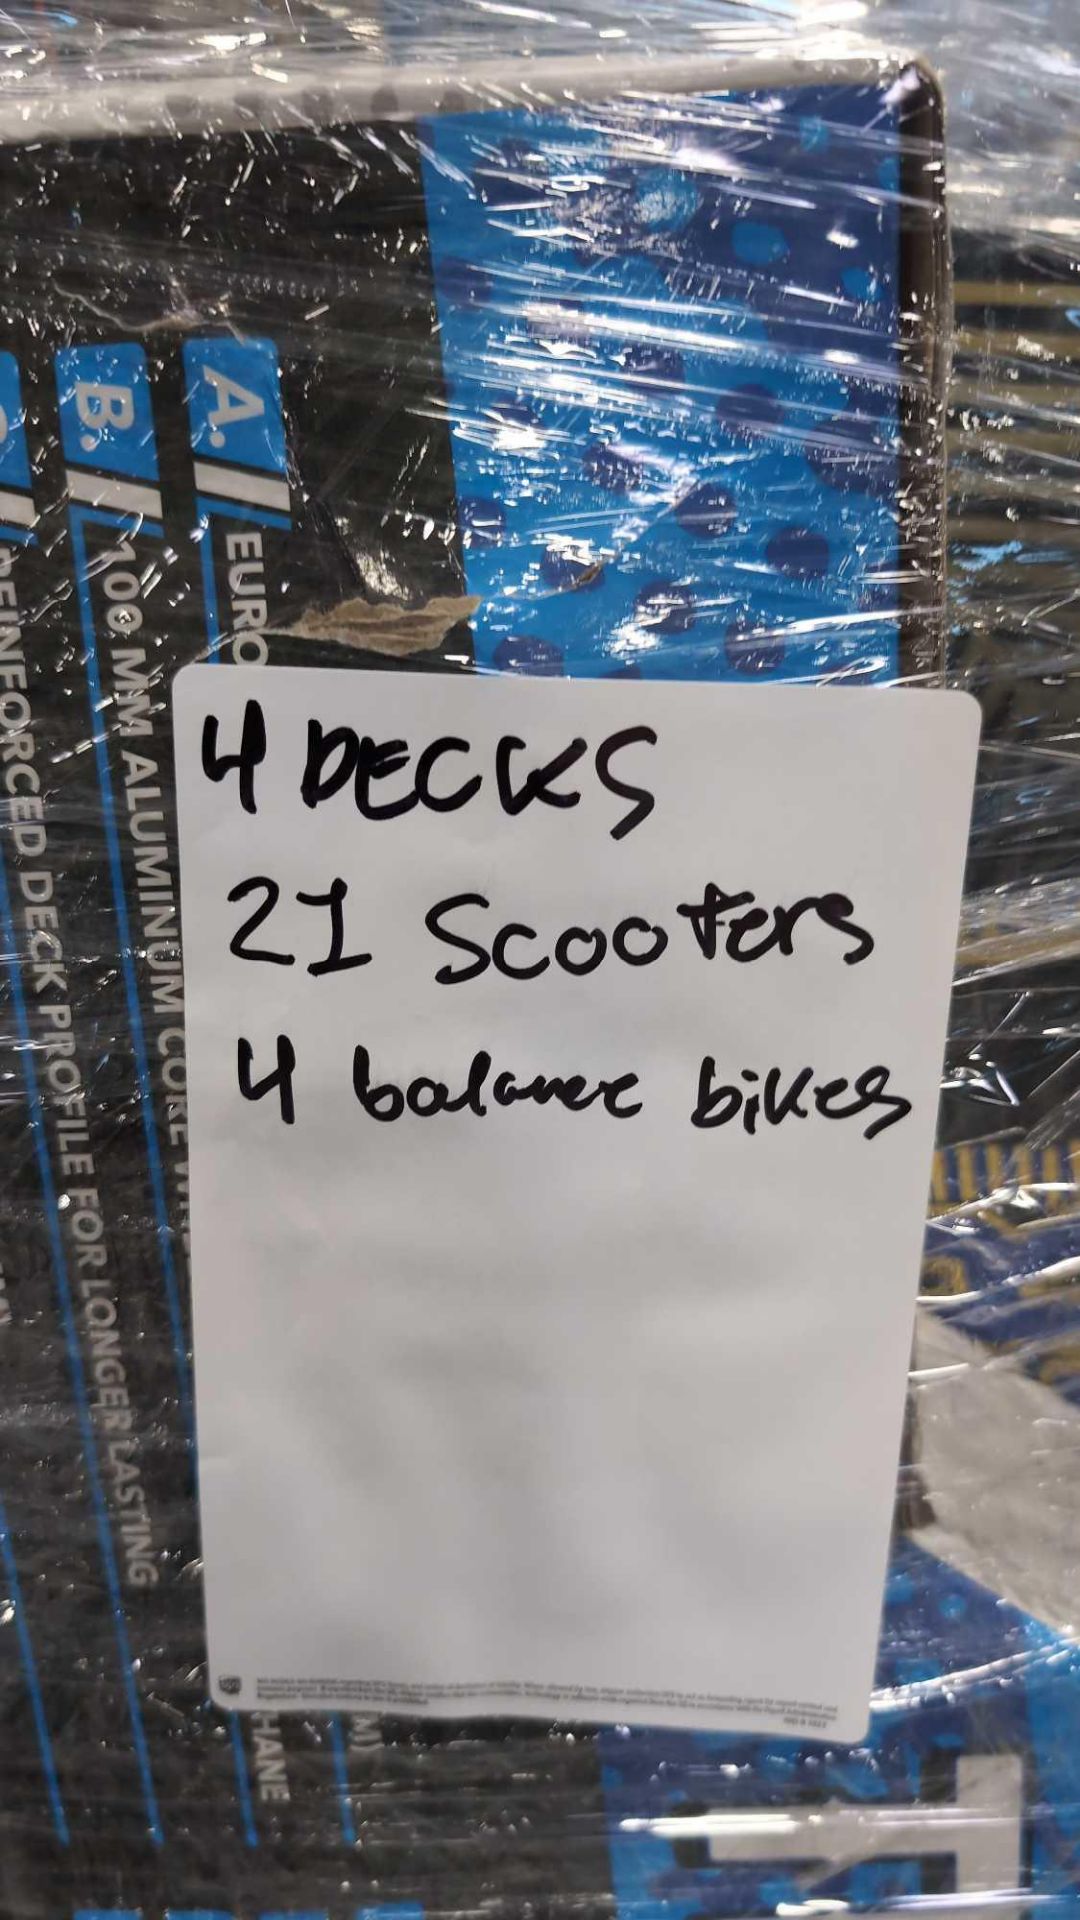 4 Decks, 21 Scooters, 4 Balance Bikes - Image 2 of 5